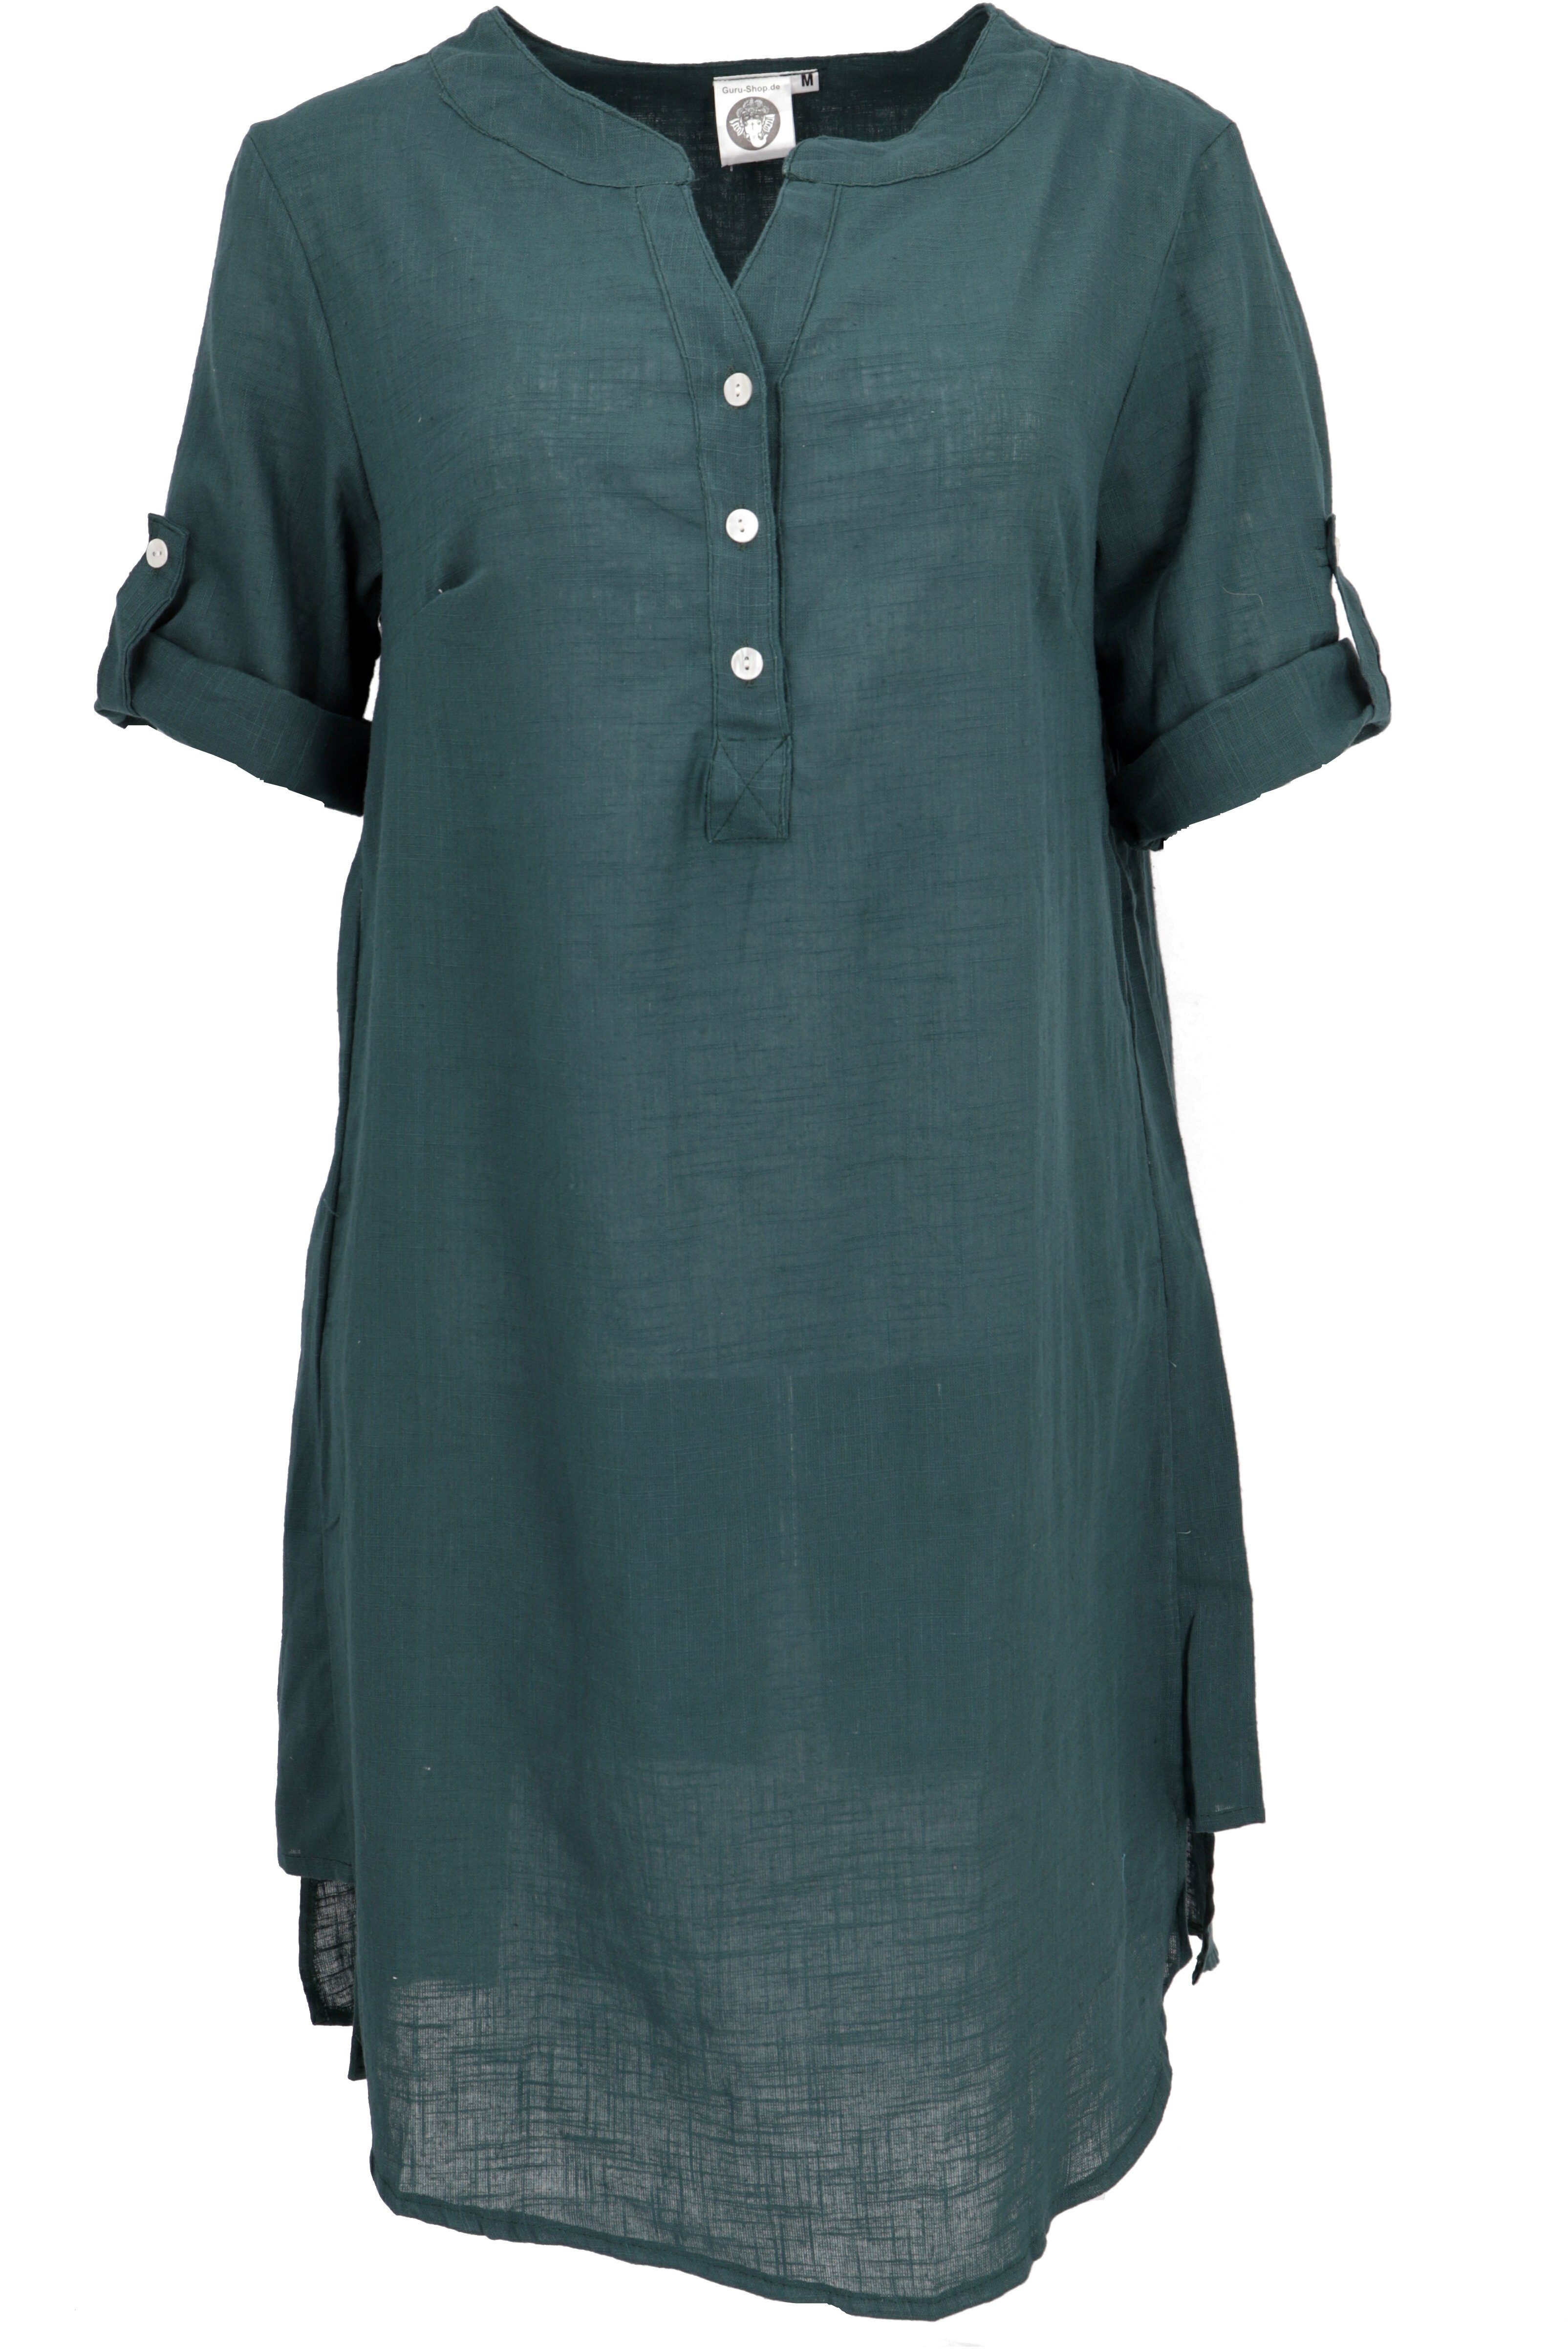 Guru-Shop Lange Hemd-Tunika Bekleidung Longbluse alternative Baumwoll -.. dunkelgrün Blusentunika,